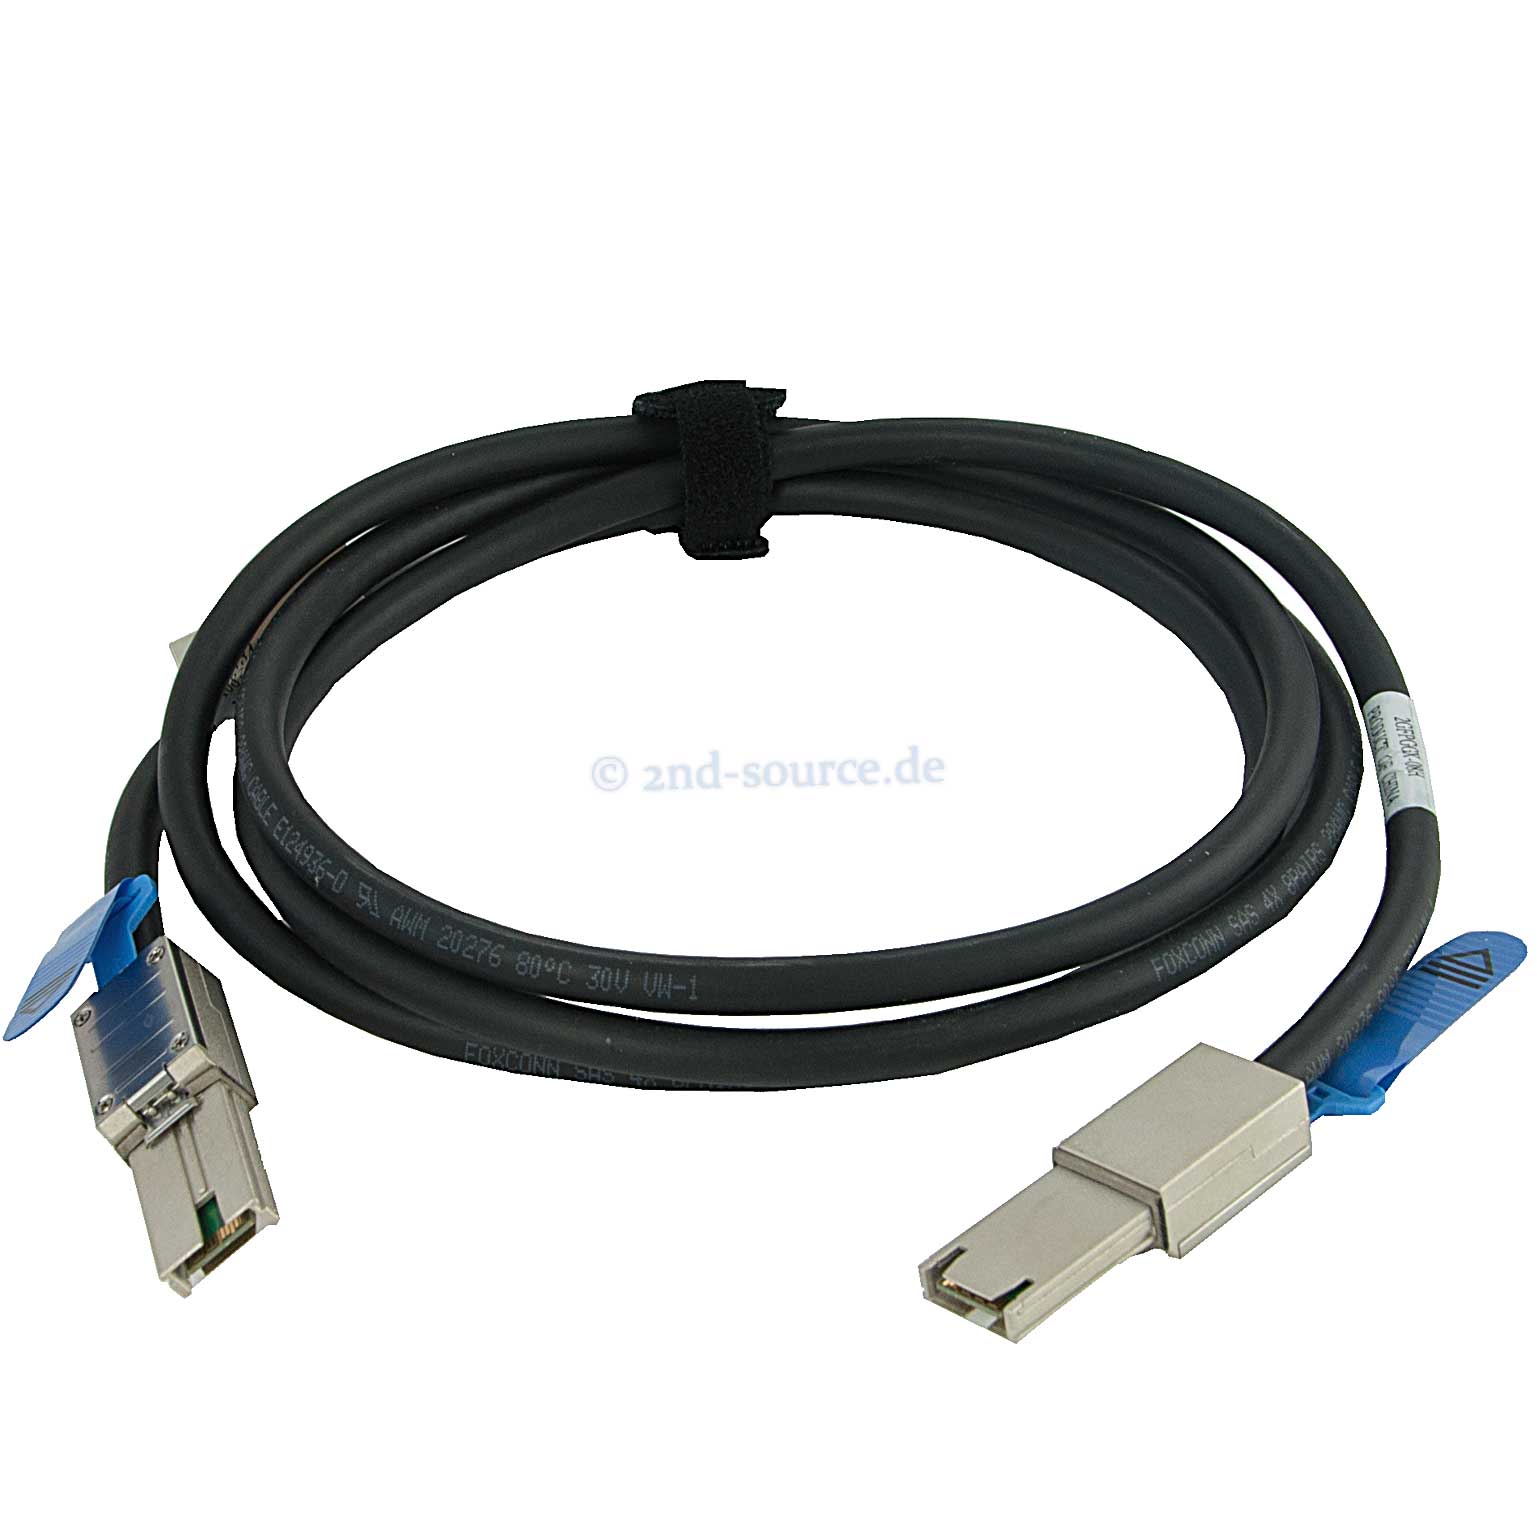 HPE 2.0m SFF-8088 to SFF-8088 External Mini SAS Cable 407339-B21 408767-001